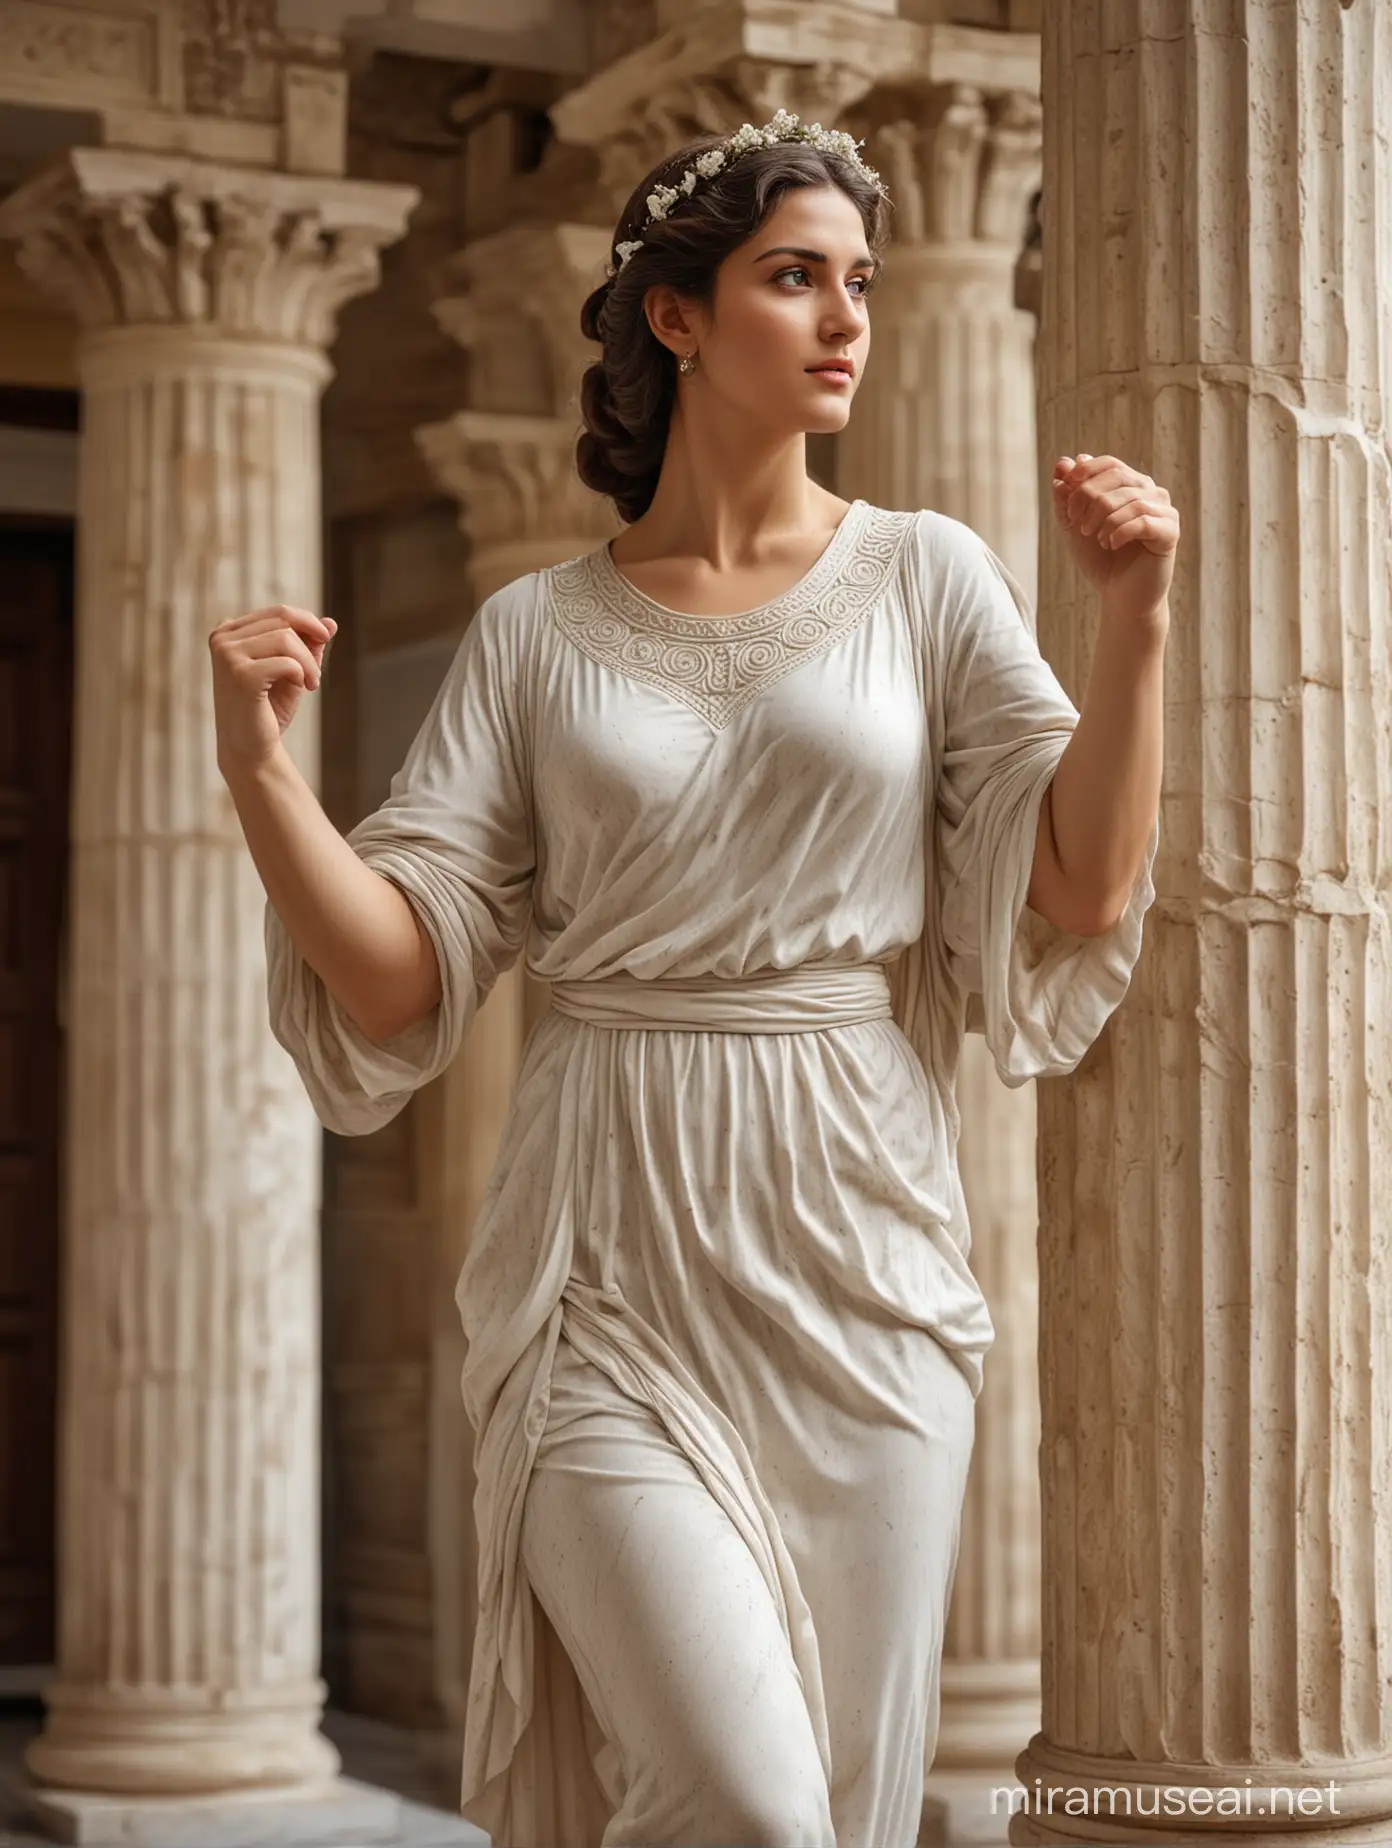 Antique Style Marble Statue Elegant Greek Woman Dancing among Columns